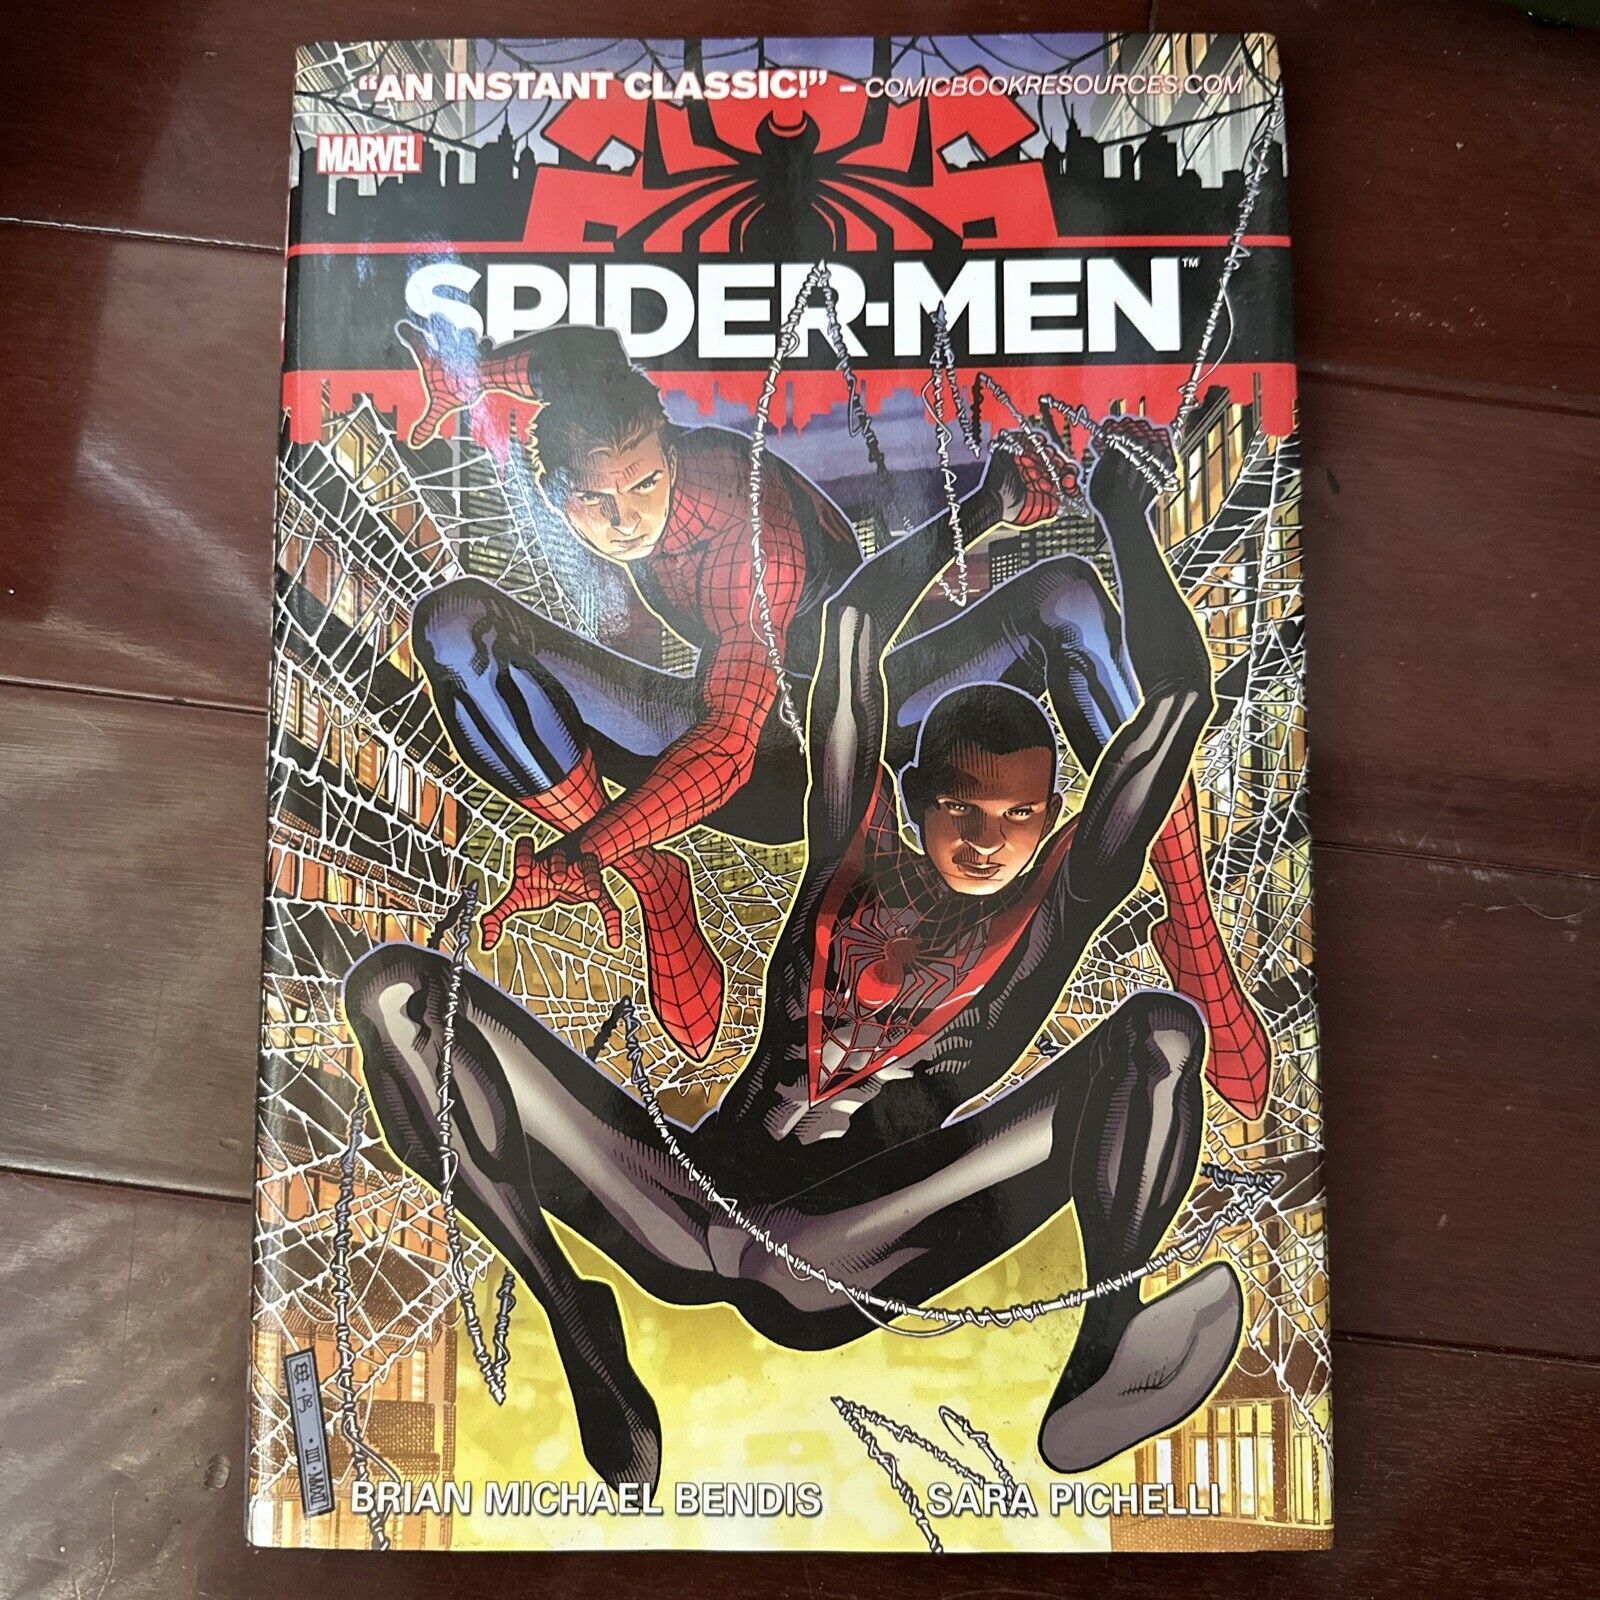 Spider-Men #1 (Marvel Comics August 2012)